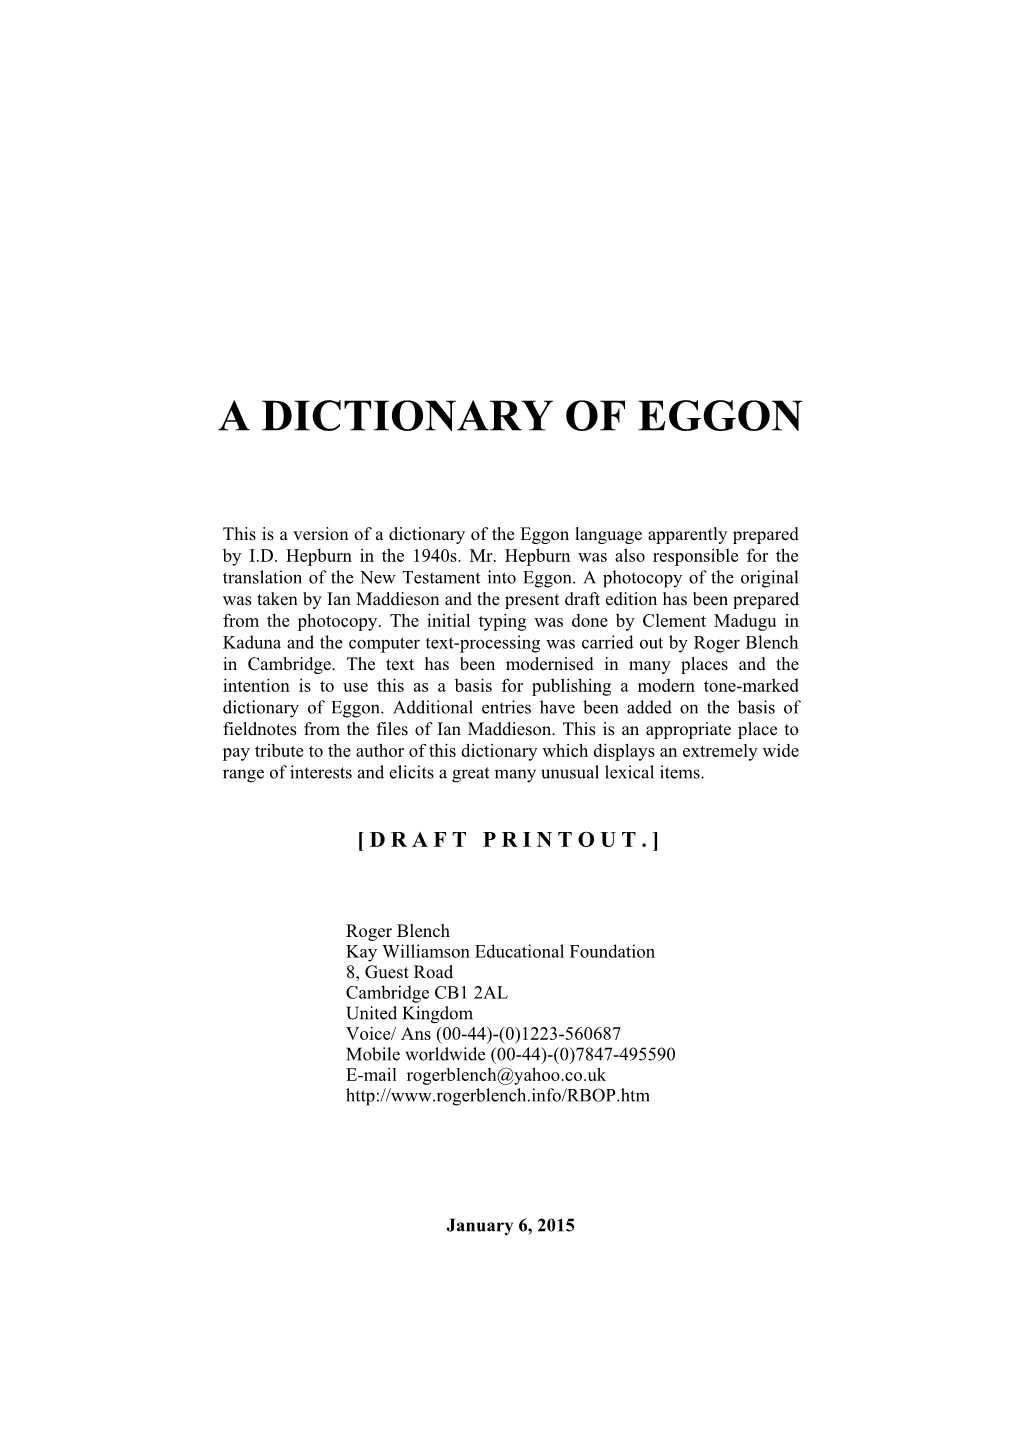 A Dictionary of Eggon